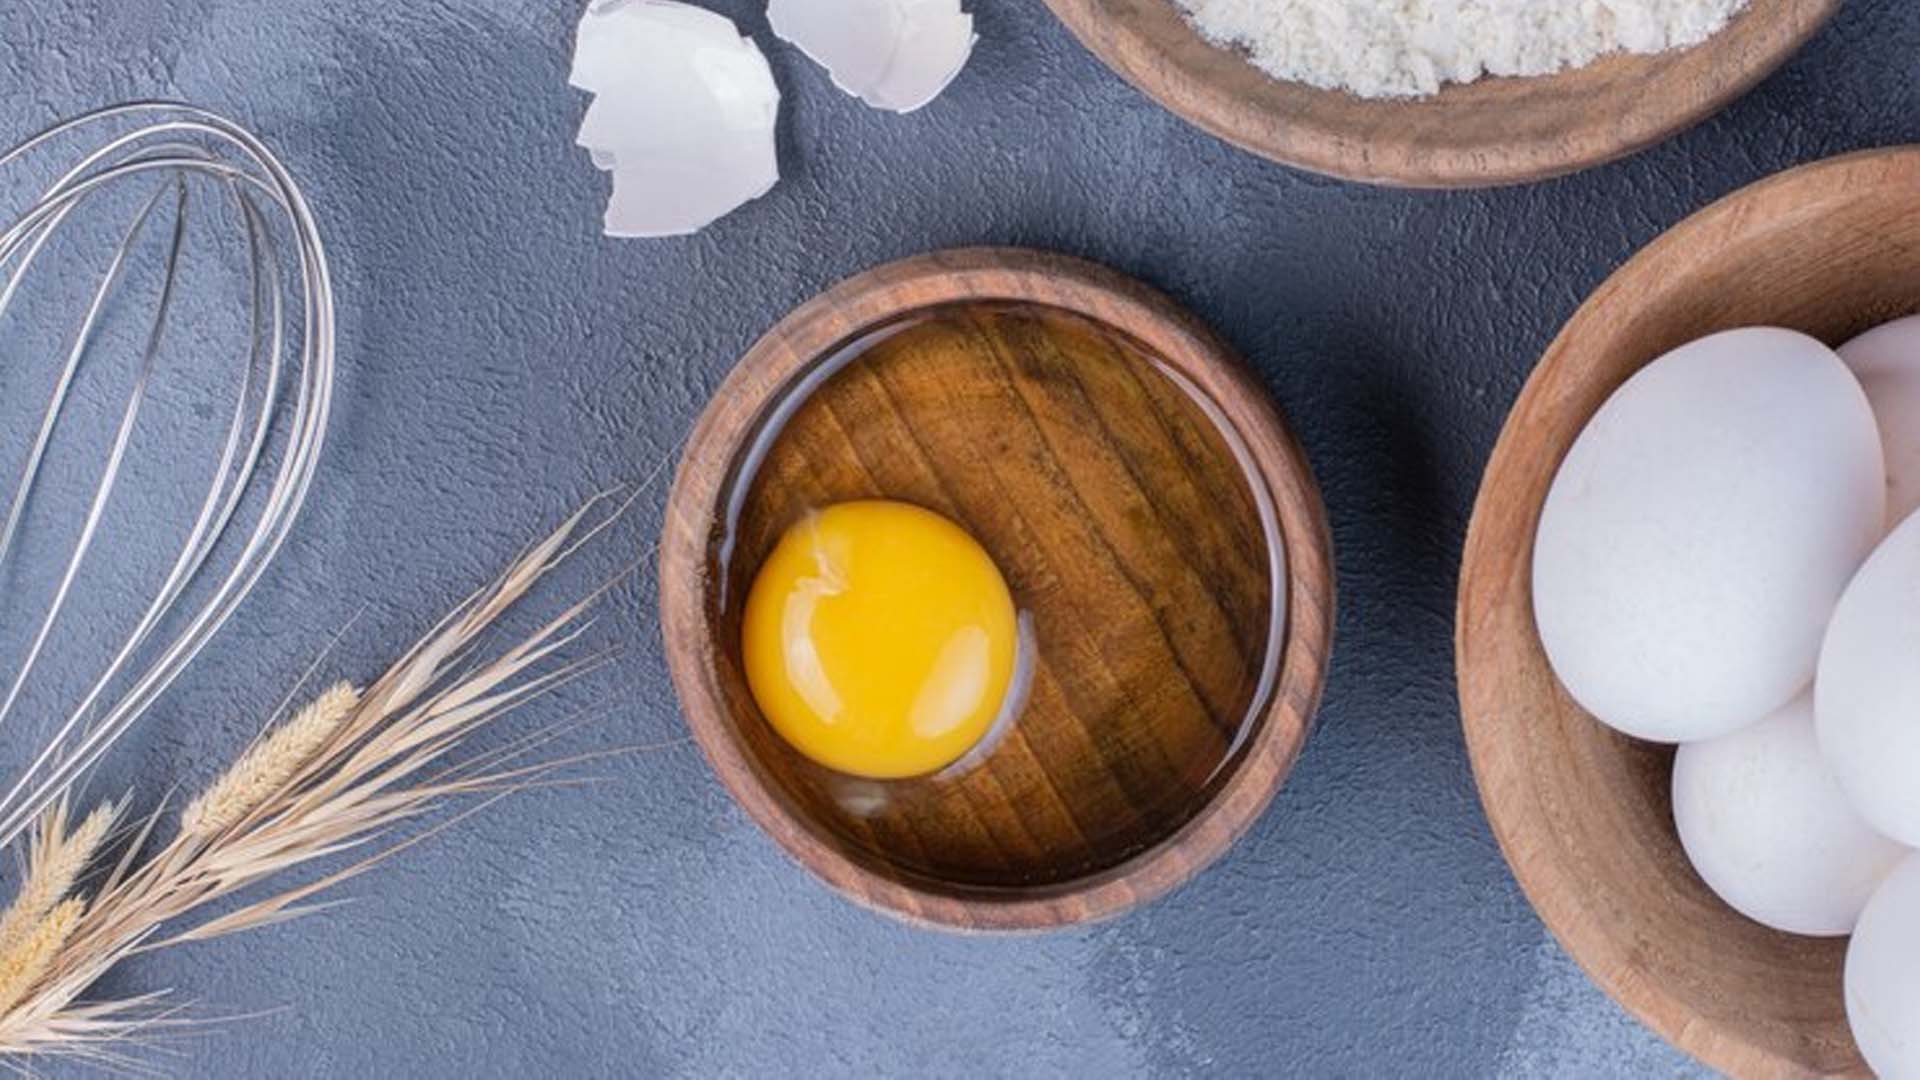 Does Egg Yolk Cause High Blood Pressure?